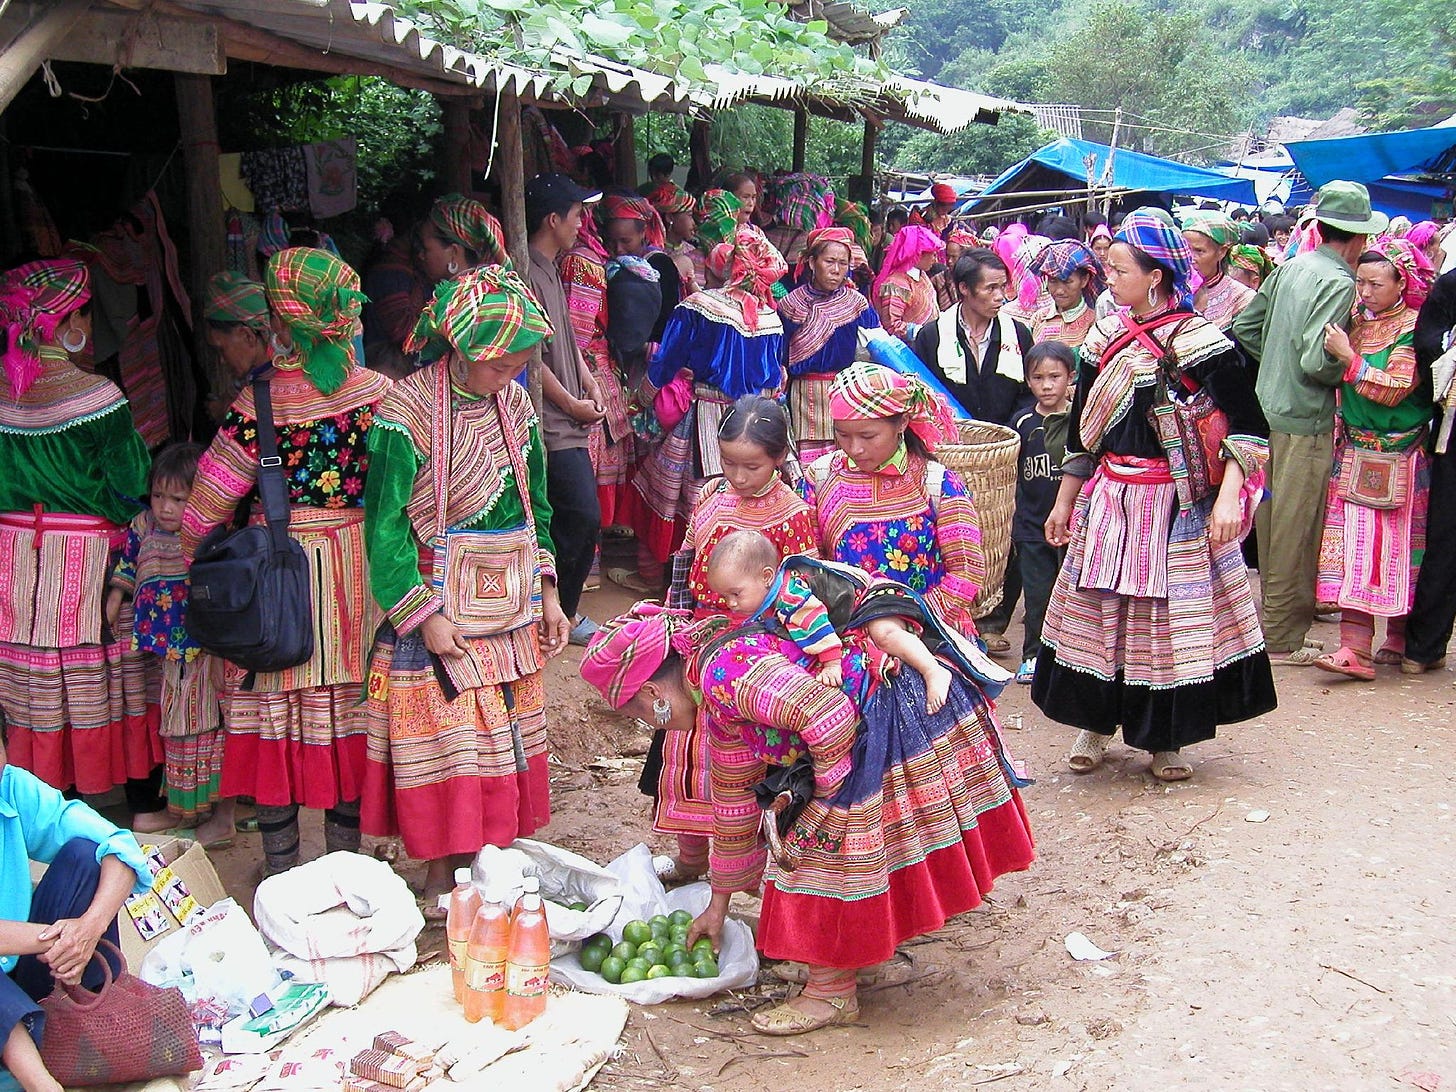 https://upload.wikimedia.org/wikipedia/commons/5/5d/Flower_Hmong_women_-_Flickr_-_exfordy_%283%29.jpg